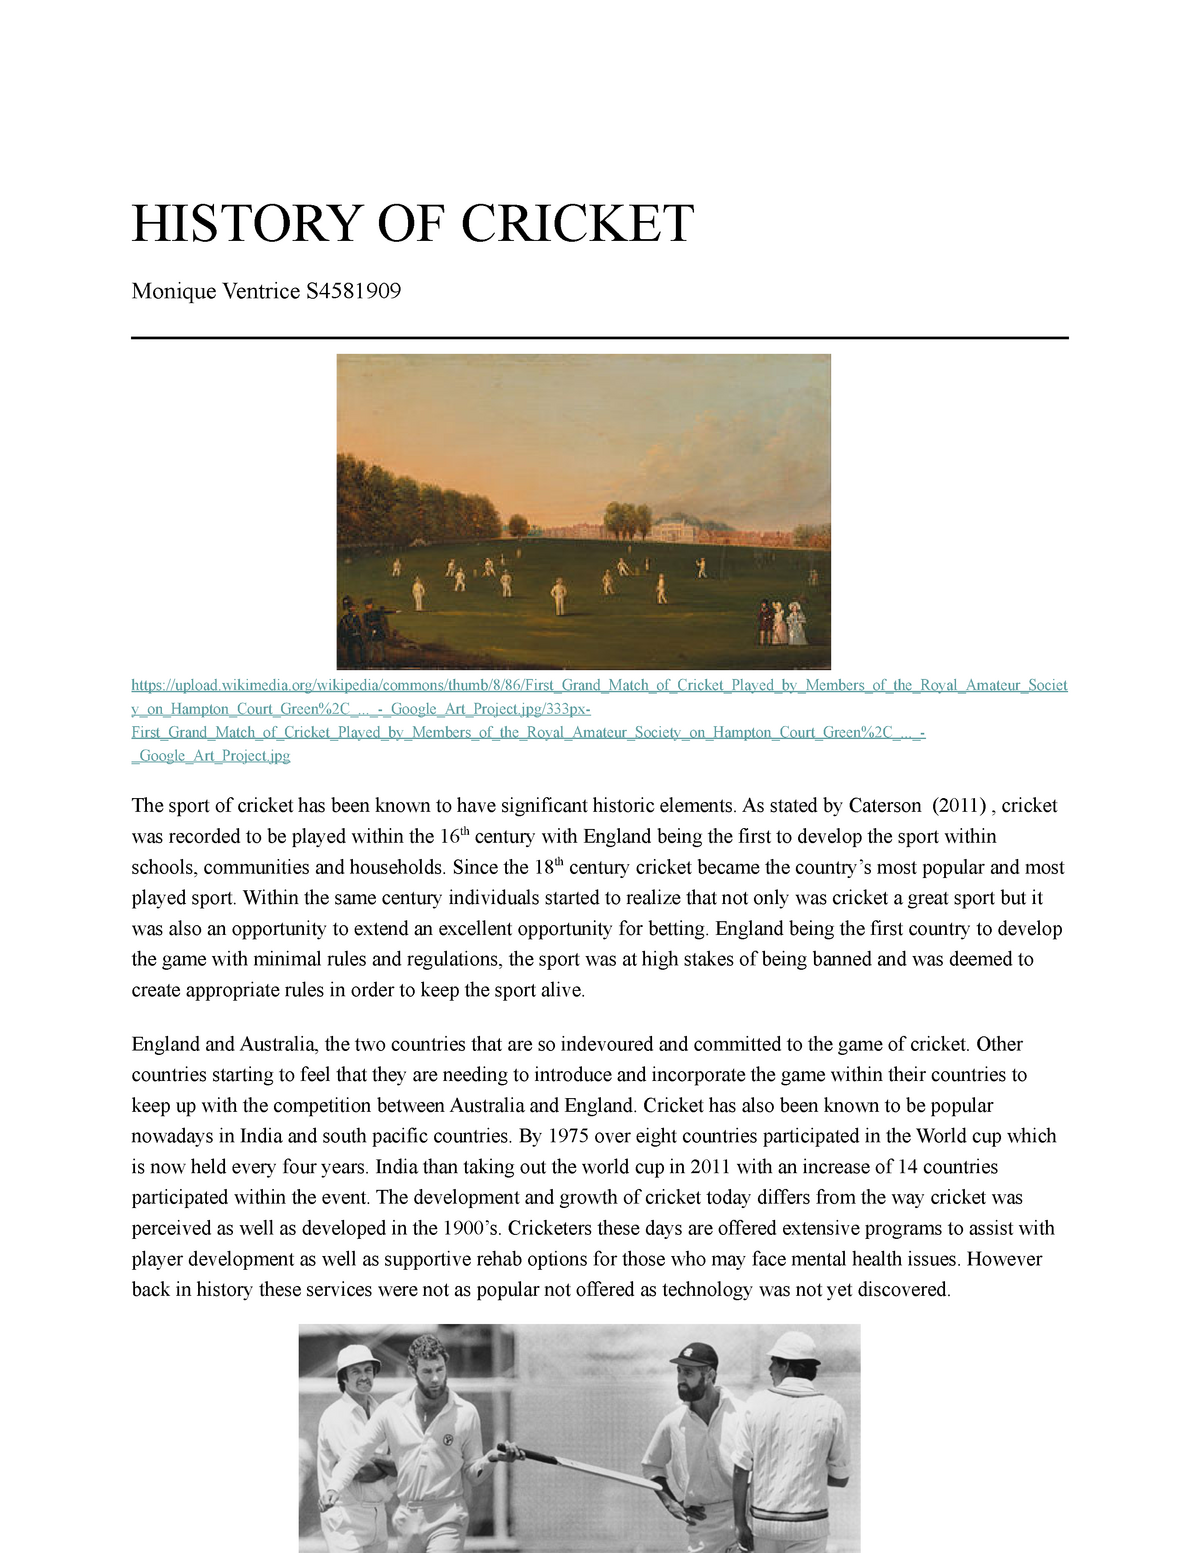 essay on history of cricket